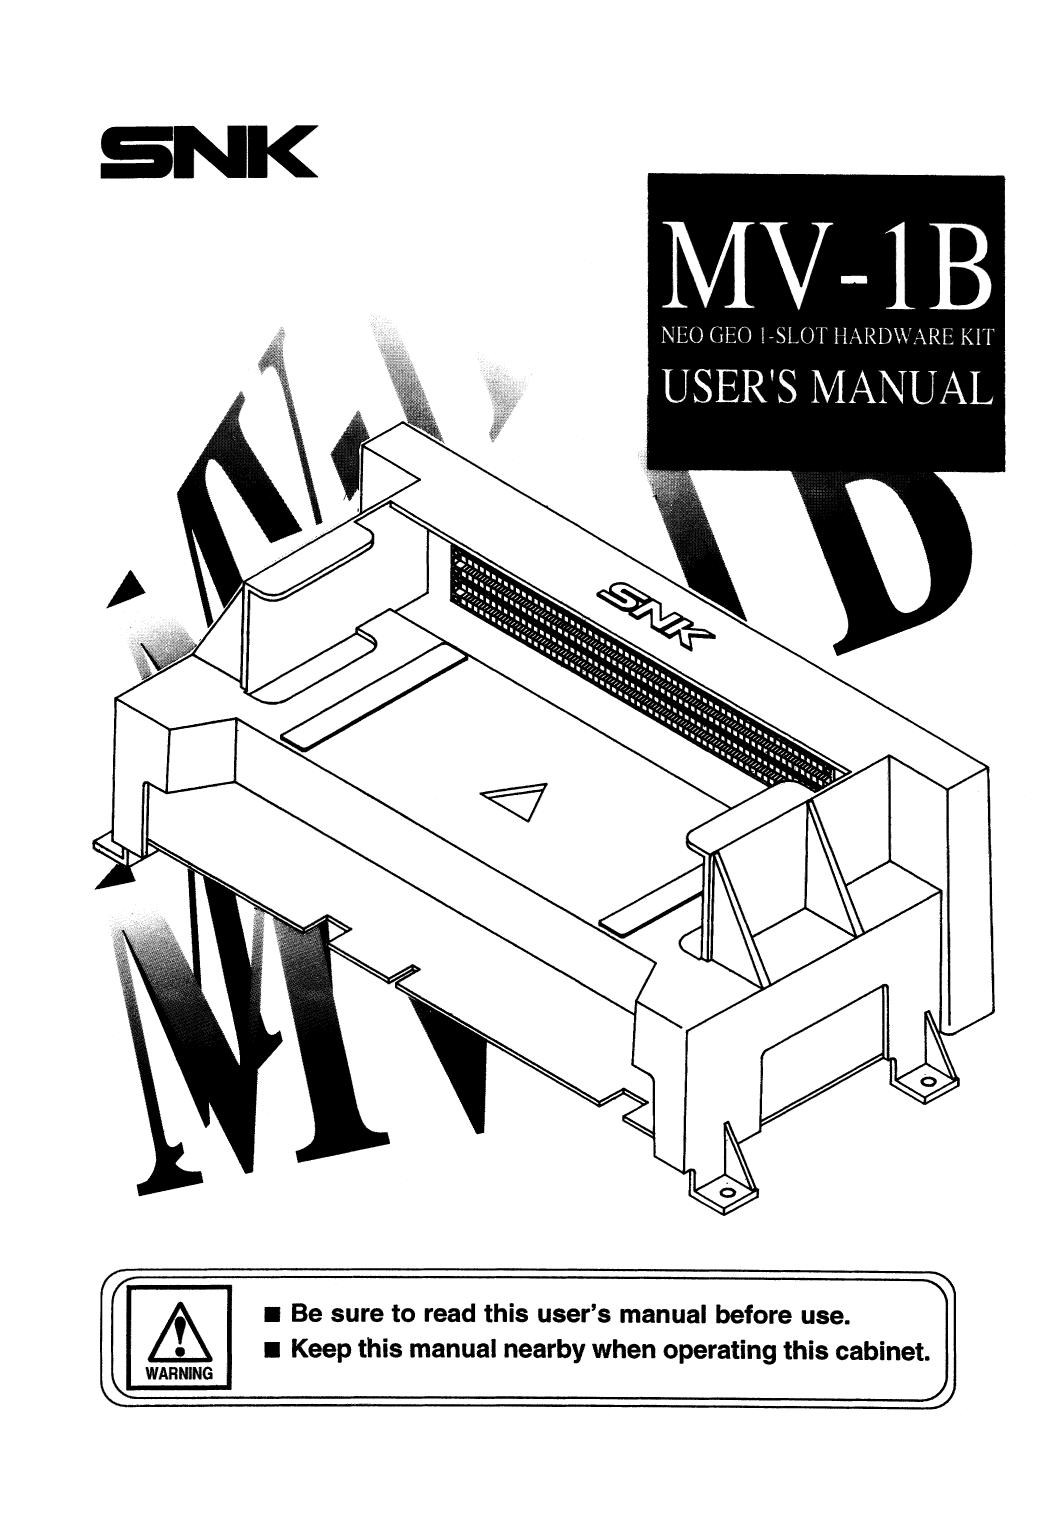 SNK Neo Geo MV-1B Manual